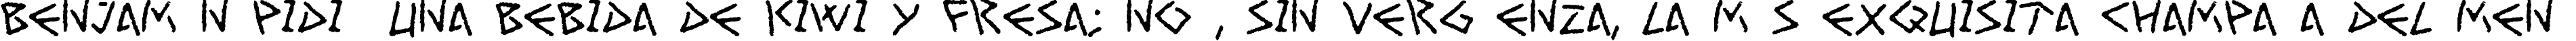 Пример написания шрифтом Art Greco текста на испанском